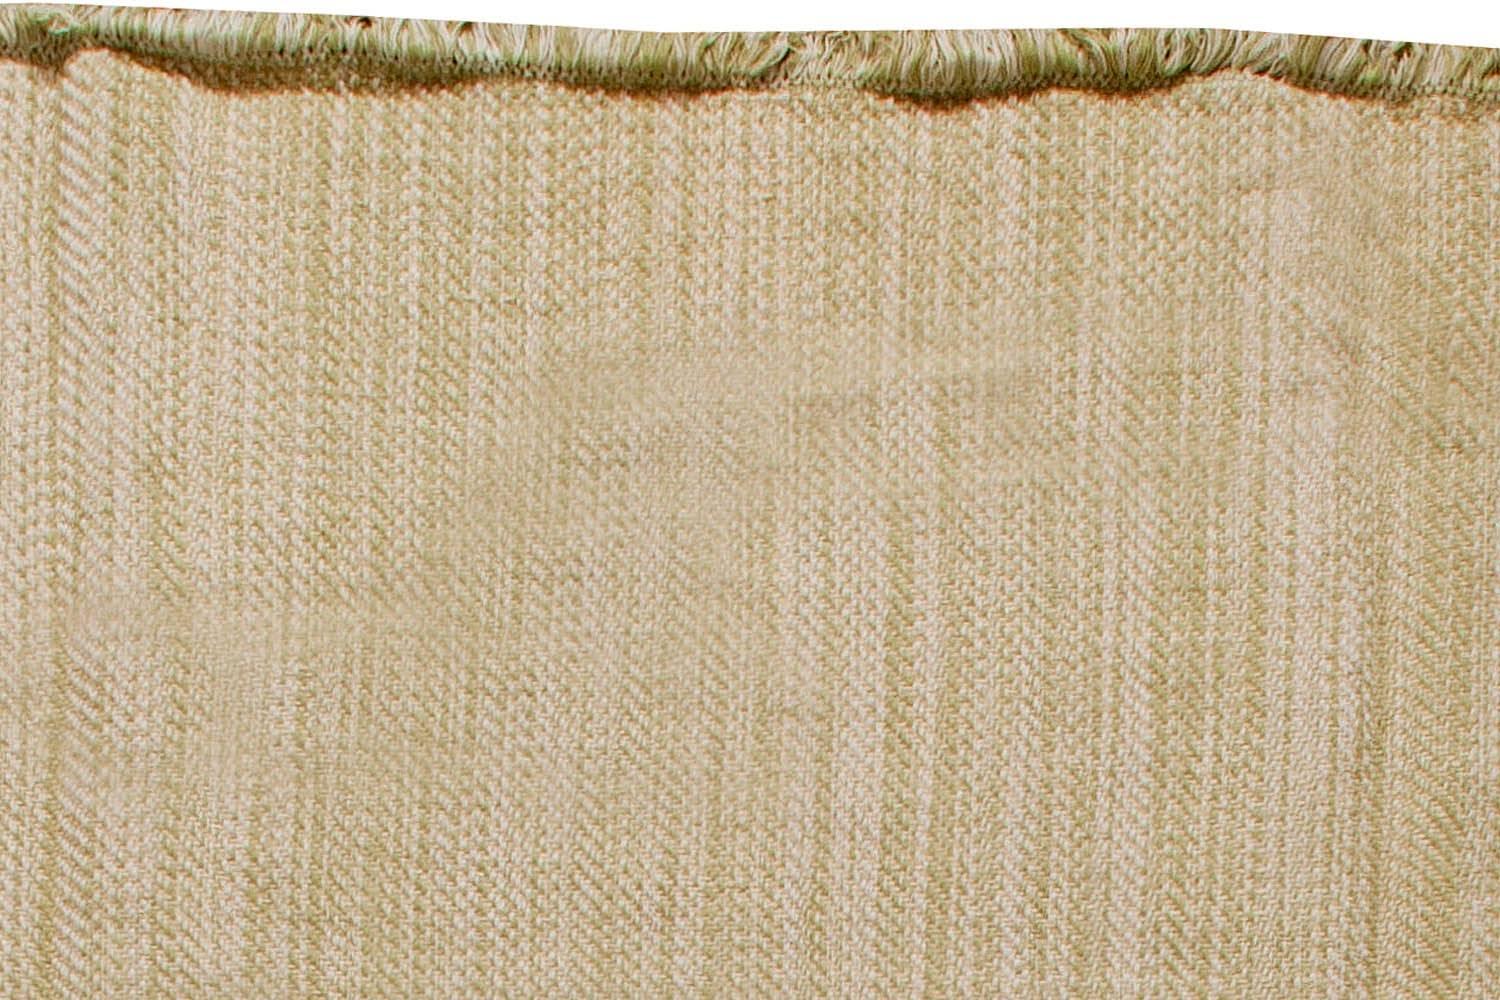 Indian Large Striped De Lys Beige Flat-Weave Wool Rug by Doris Leslie Blau For Sale